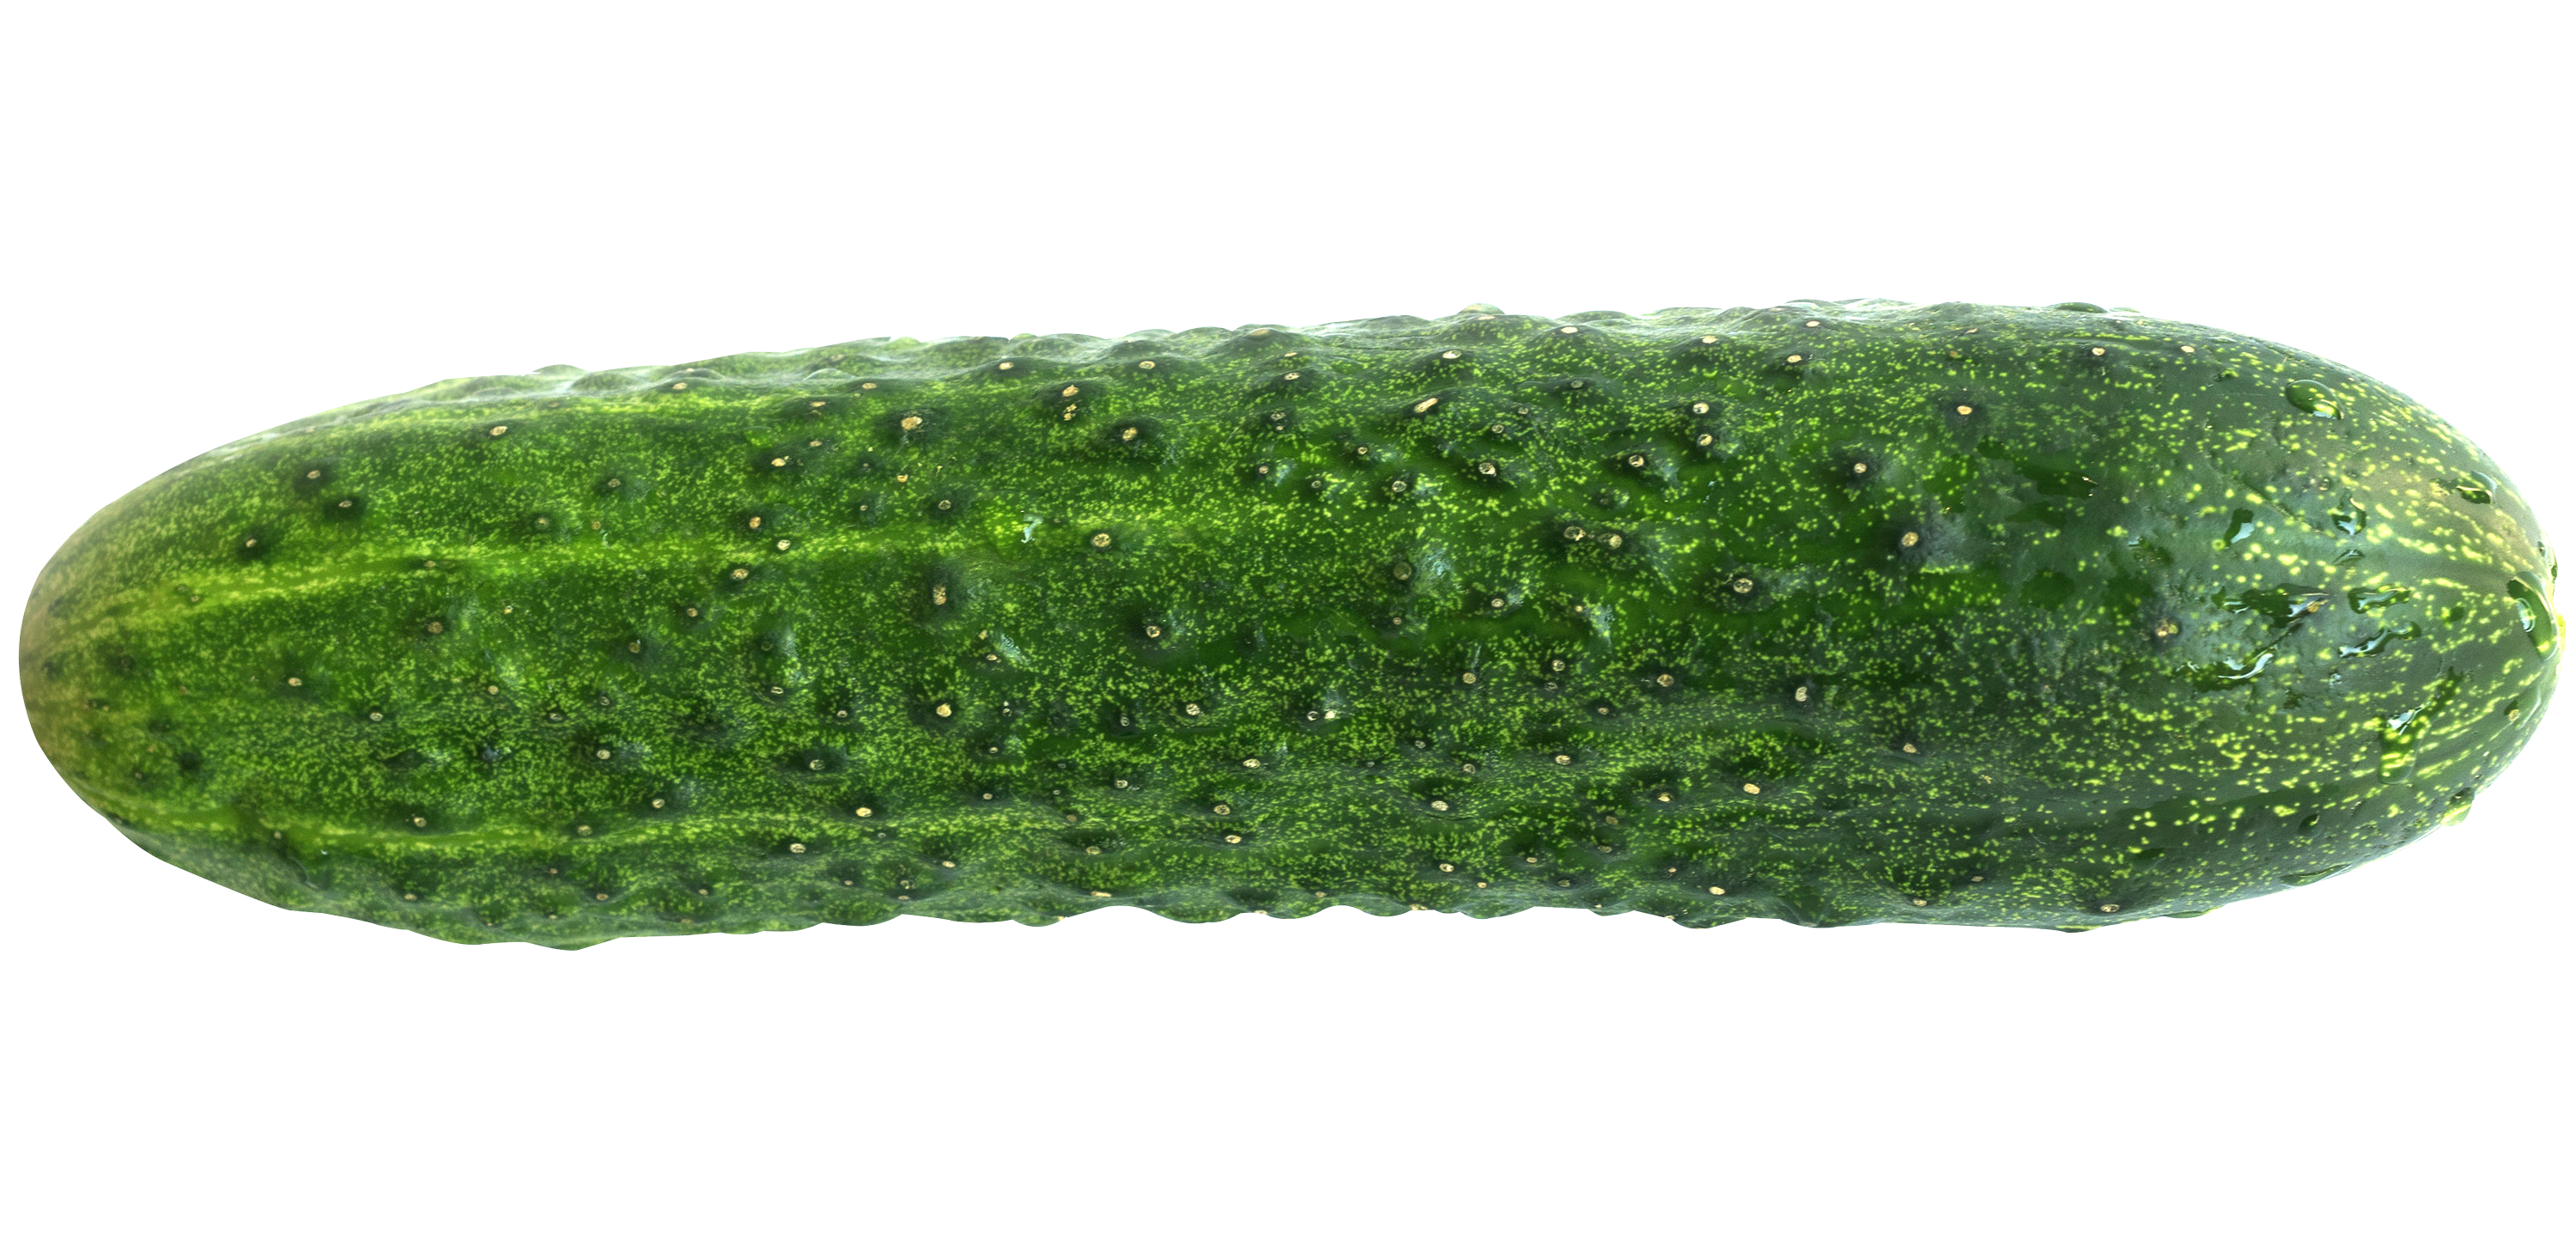 cucumber png image pngpix #26778